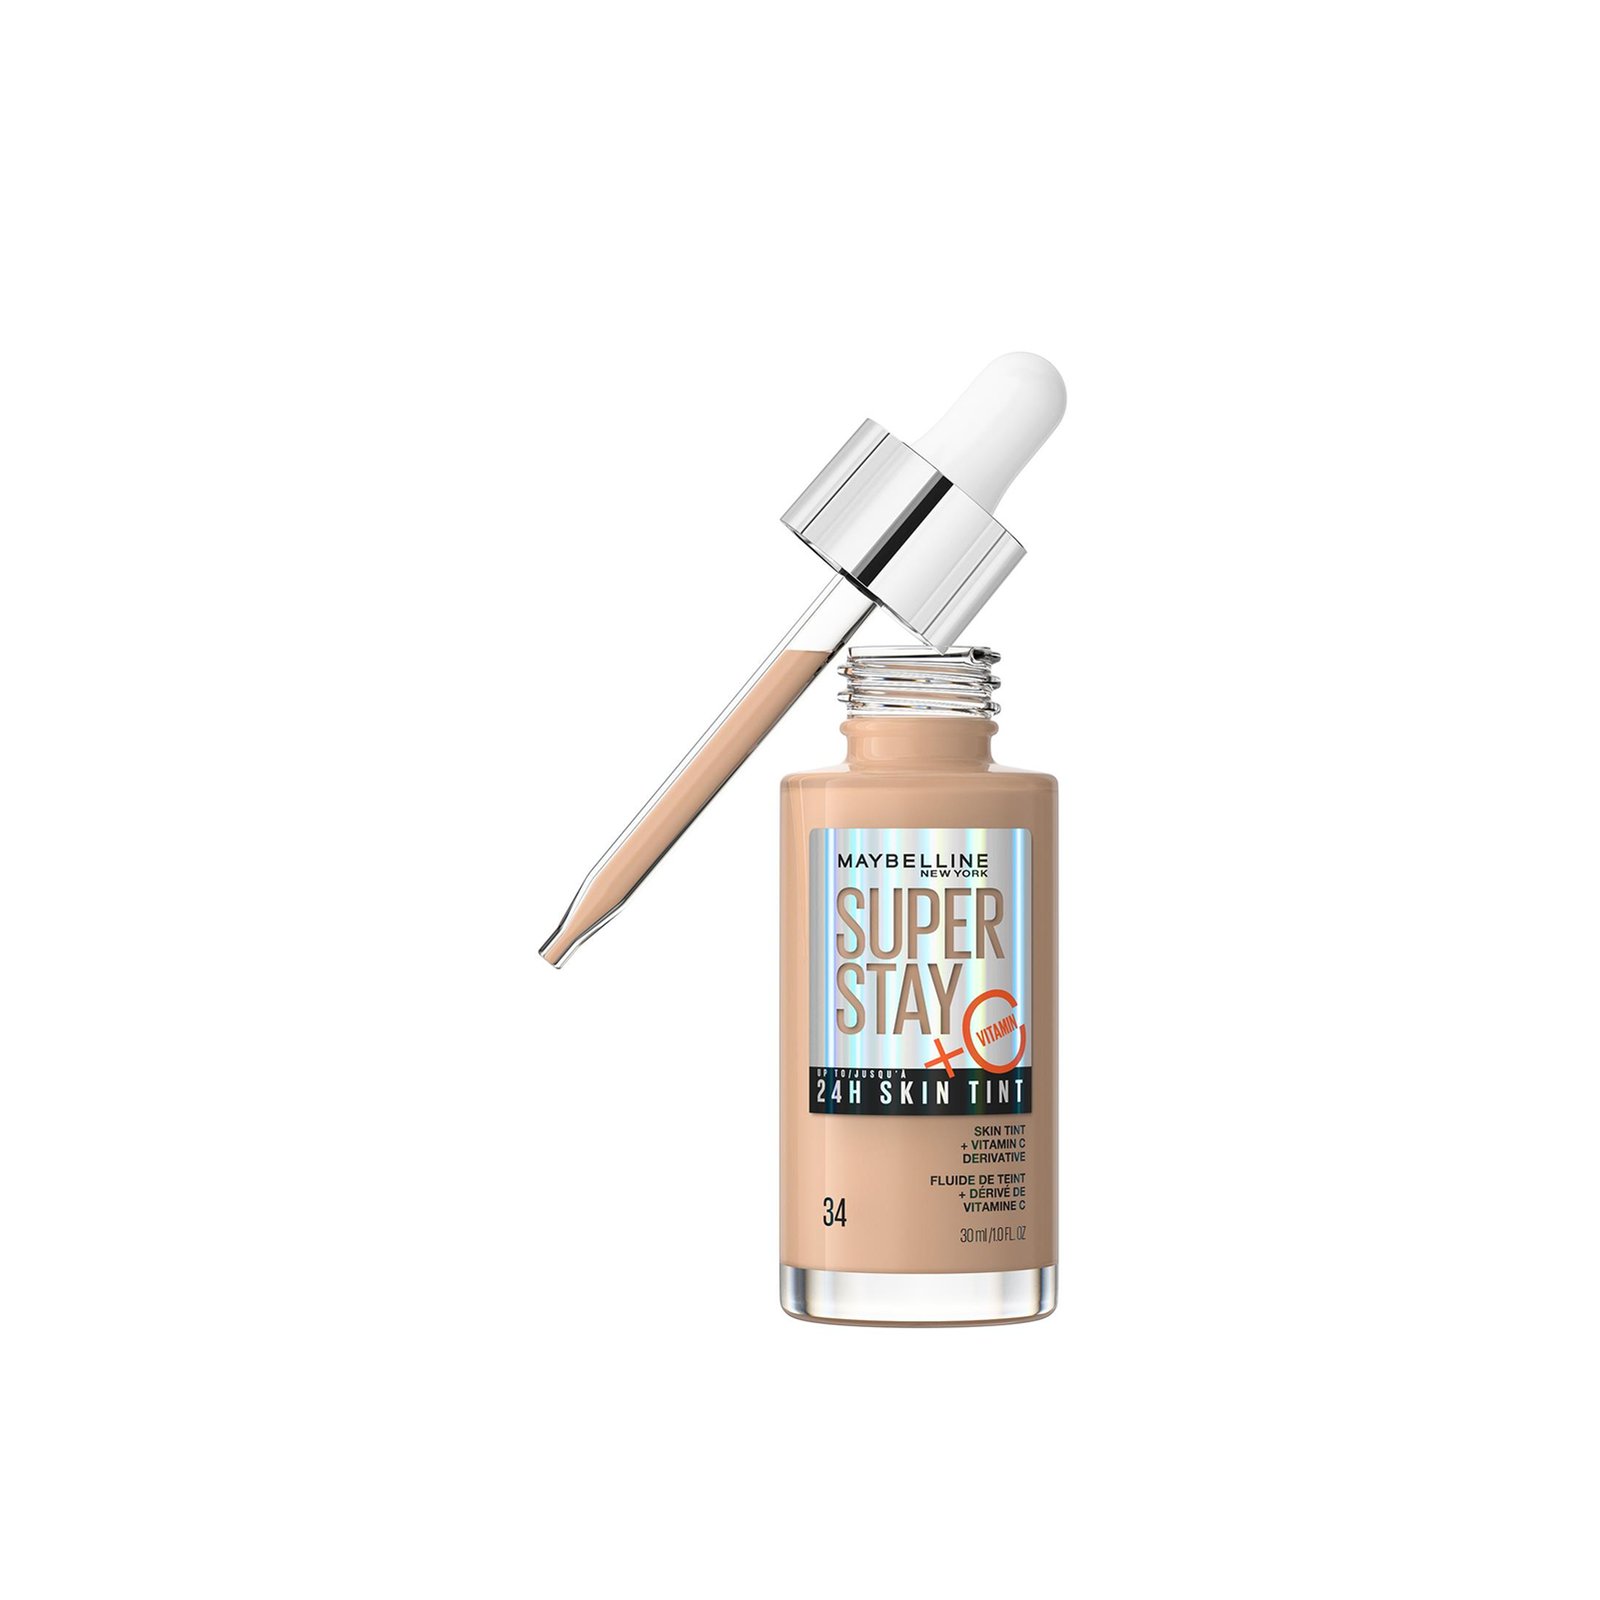 Maybelline Super Stay 24H Skin Tint Foundation 34 30ml (1.0 fl oz)